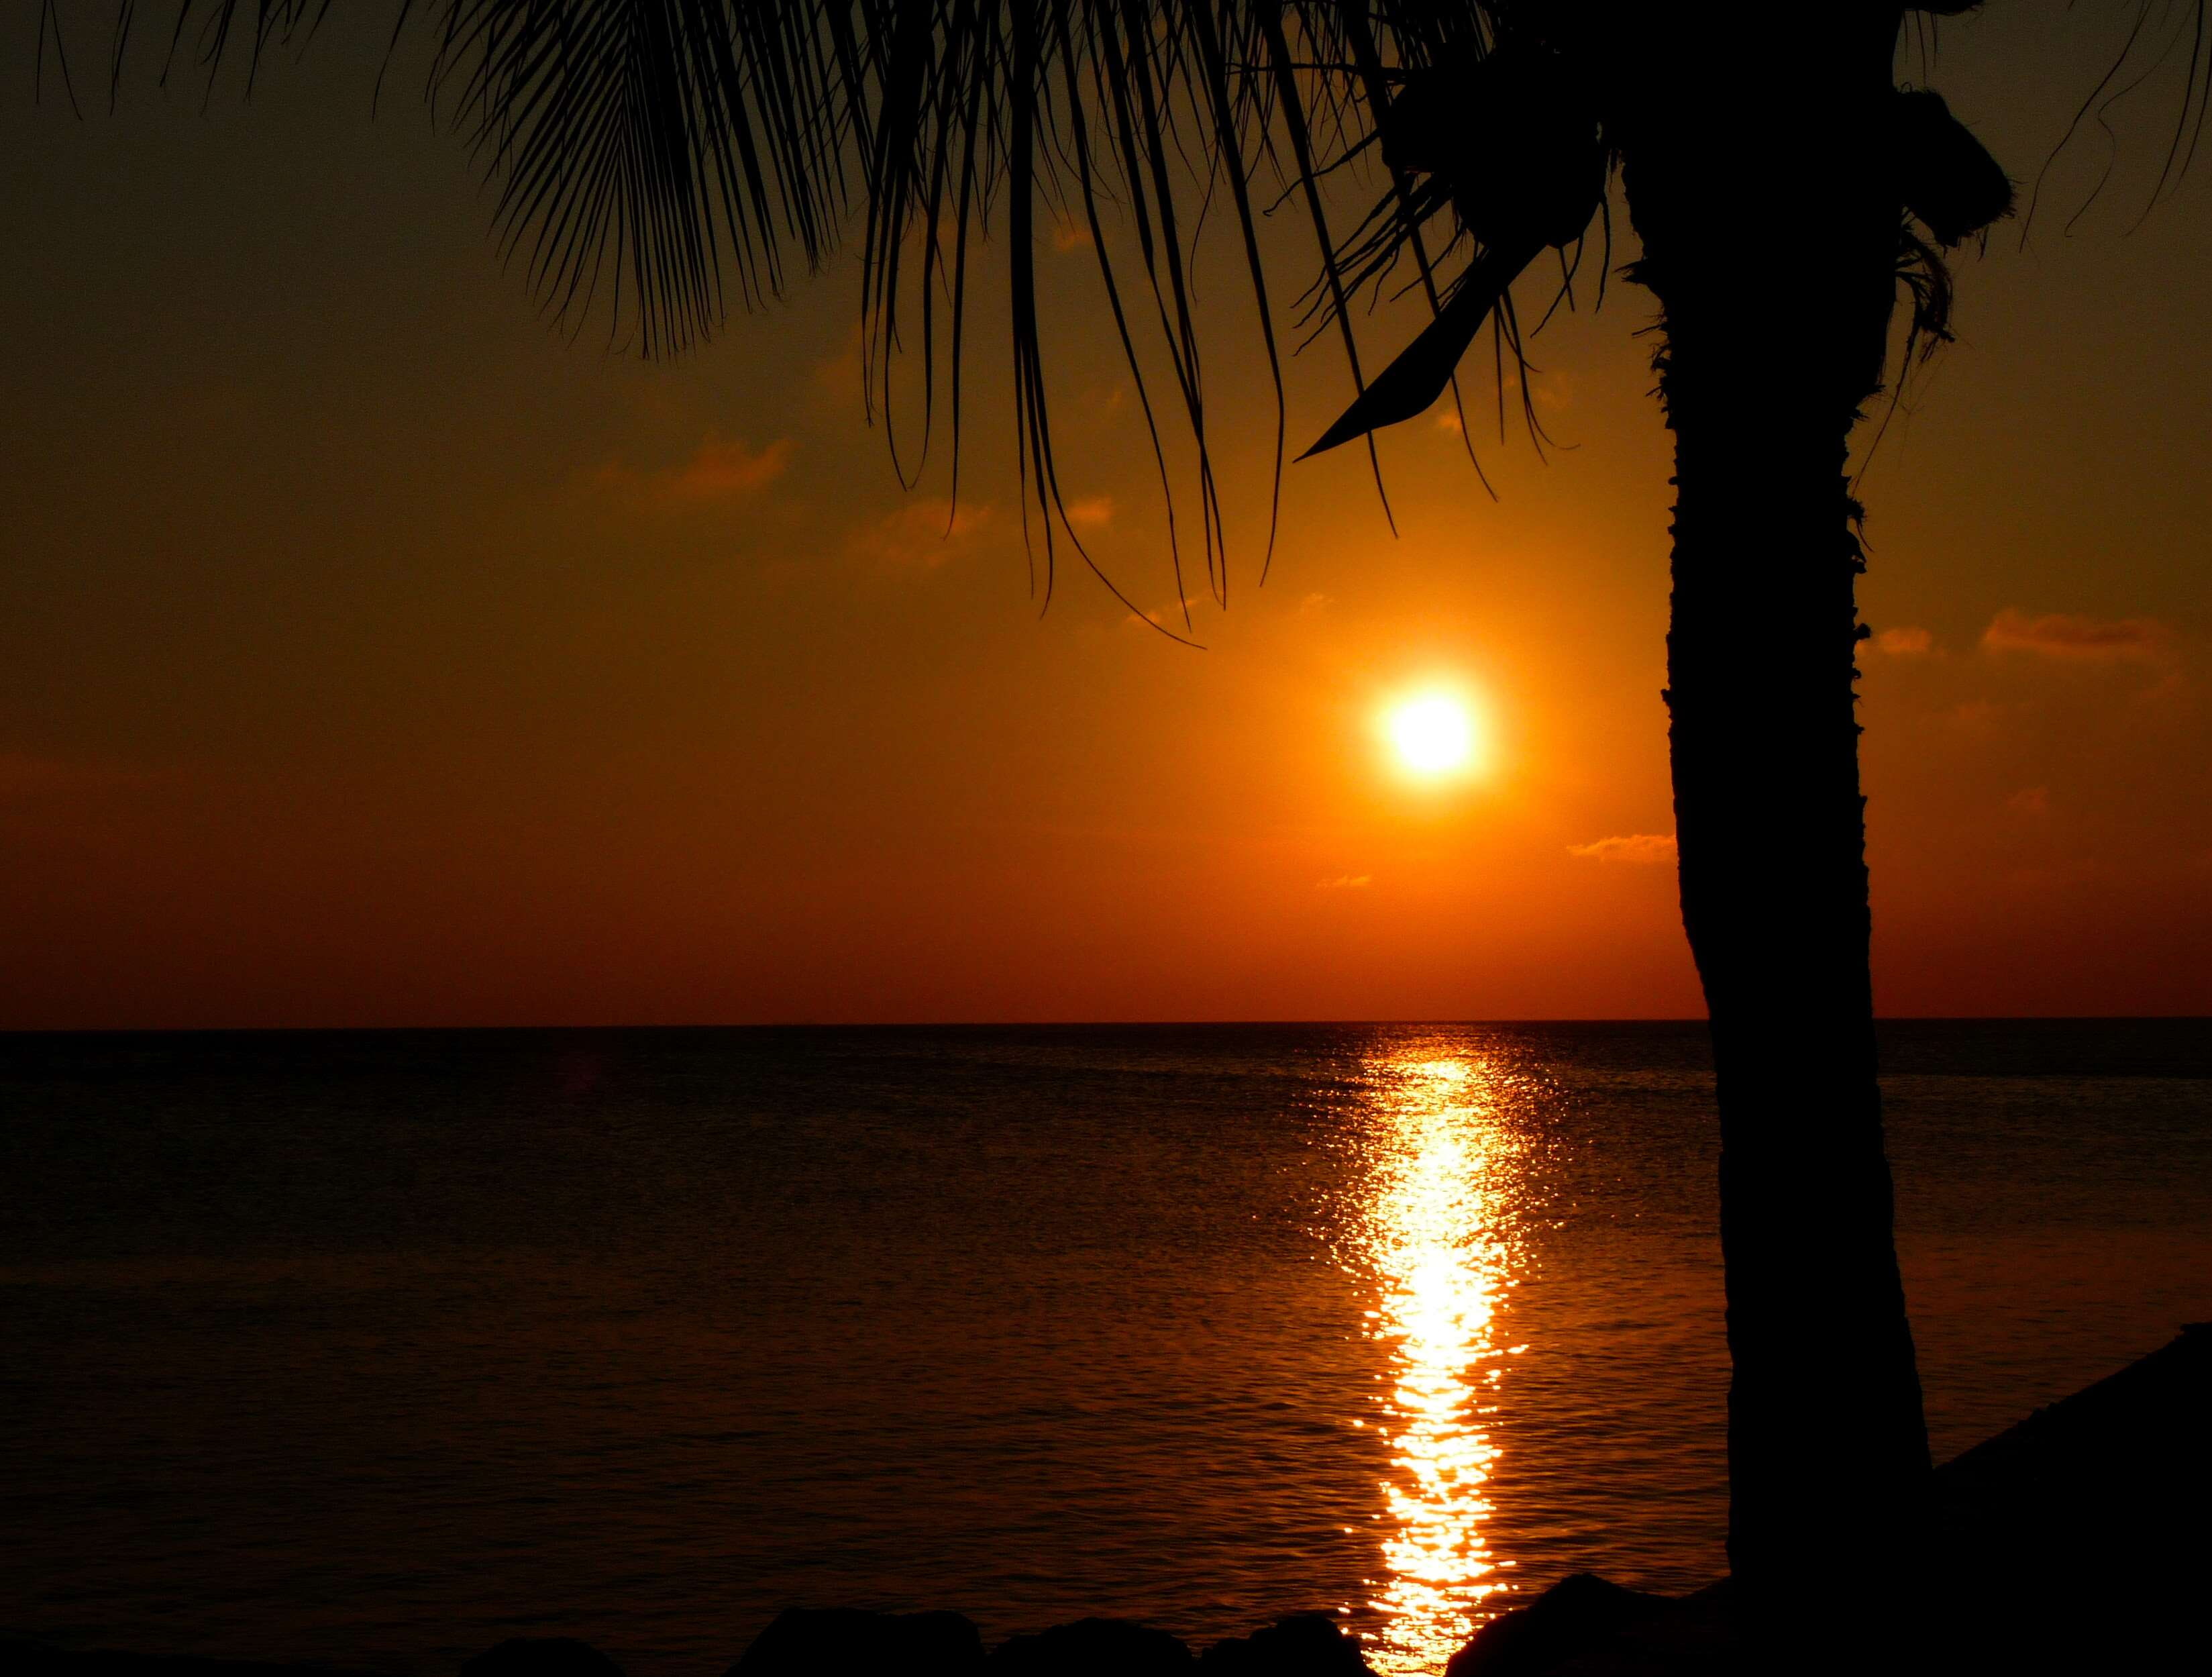 caribbean, dawn, dusk, hd, holiday, ocean, palm, salt water